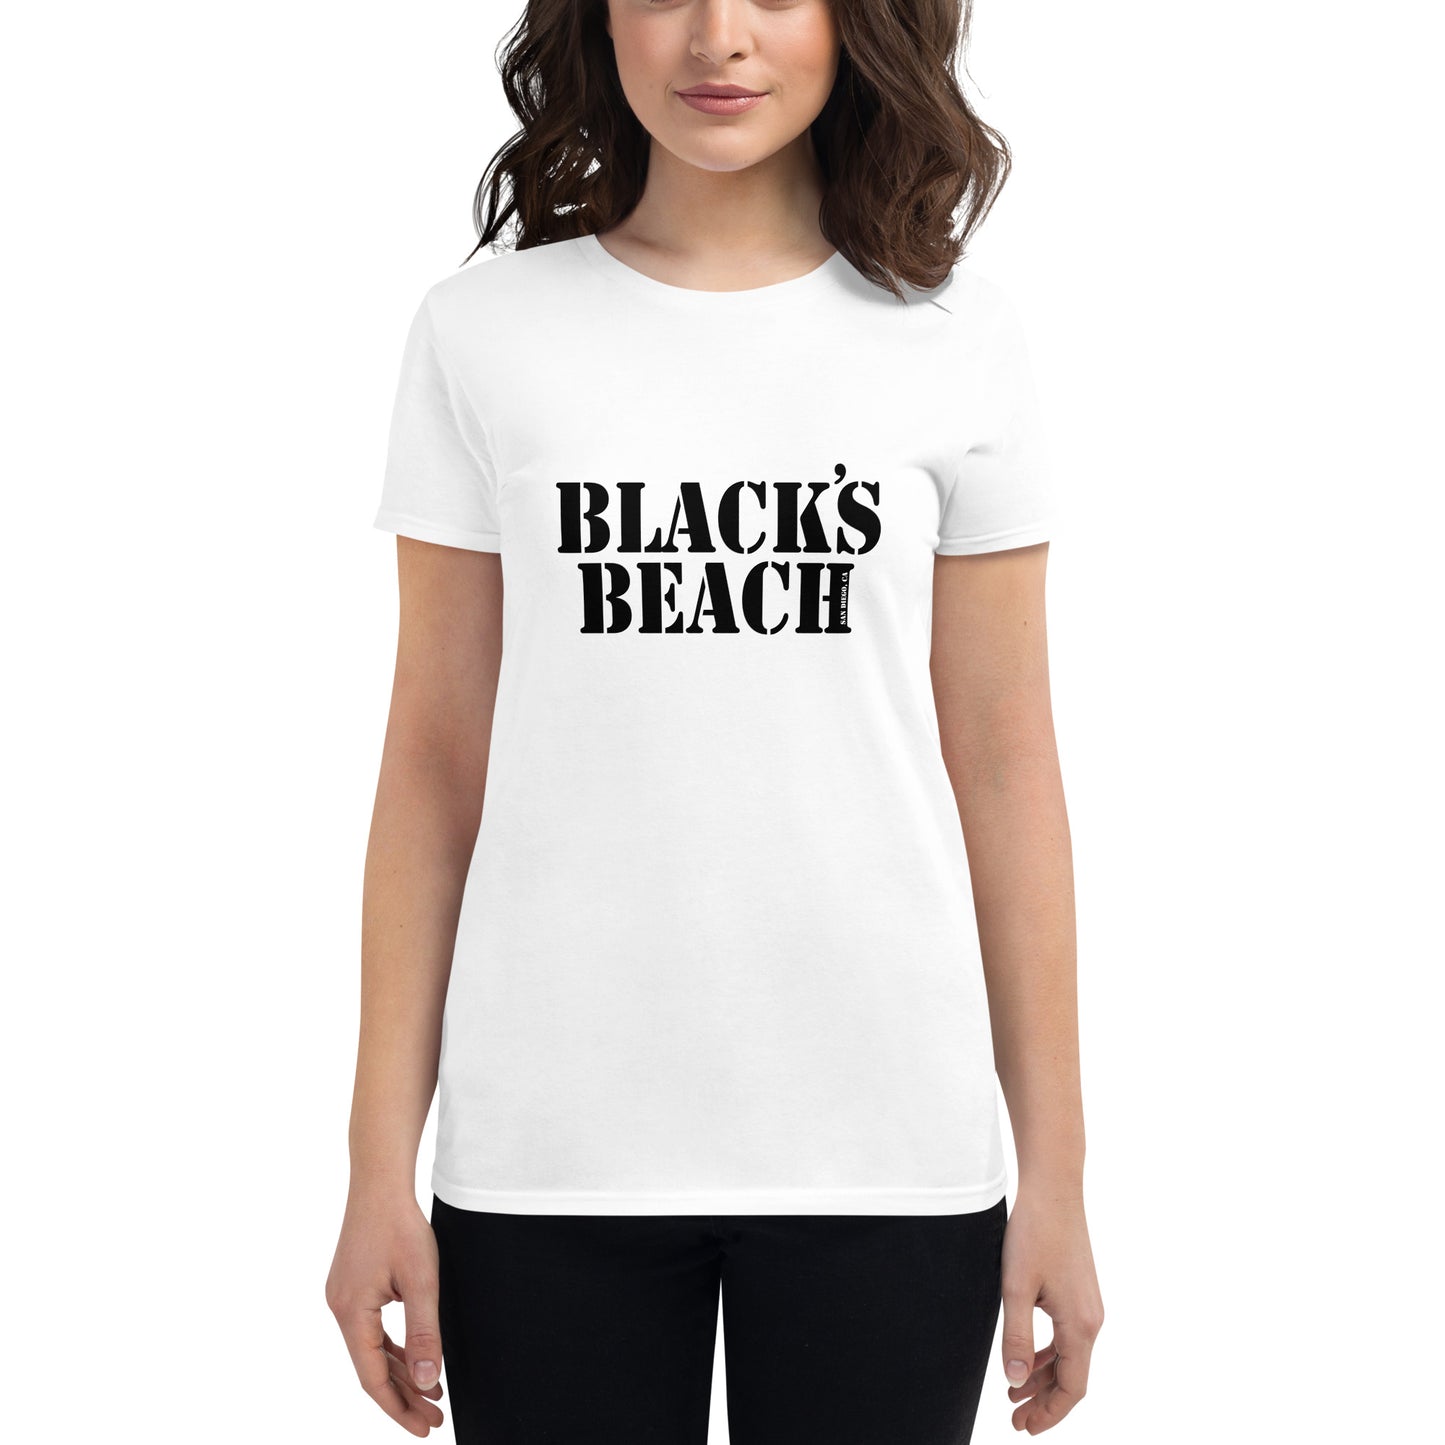 Black's Beach Tees / Style 21 / Women's short sleeve t-shirt